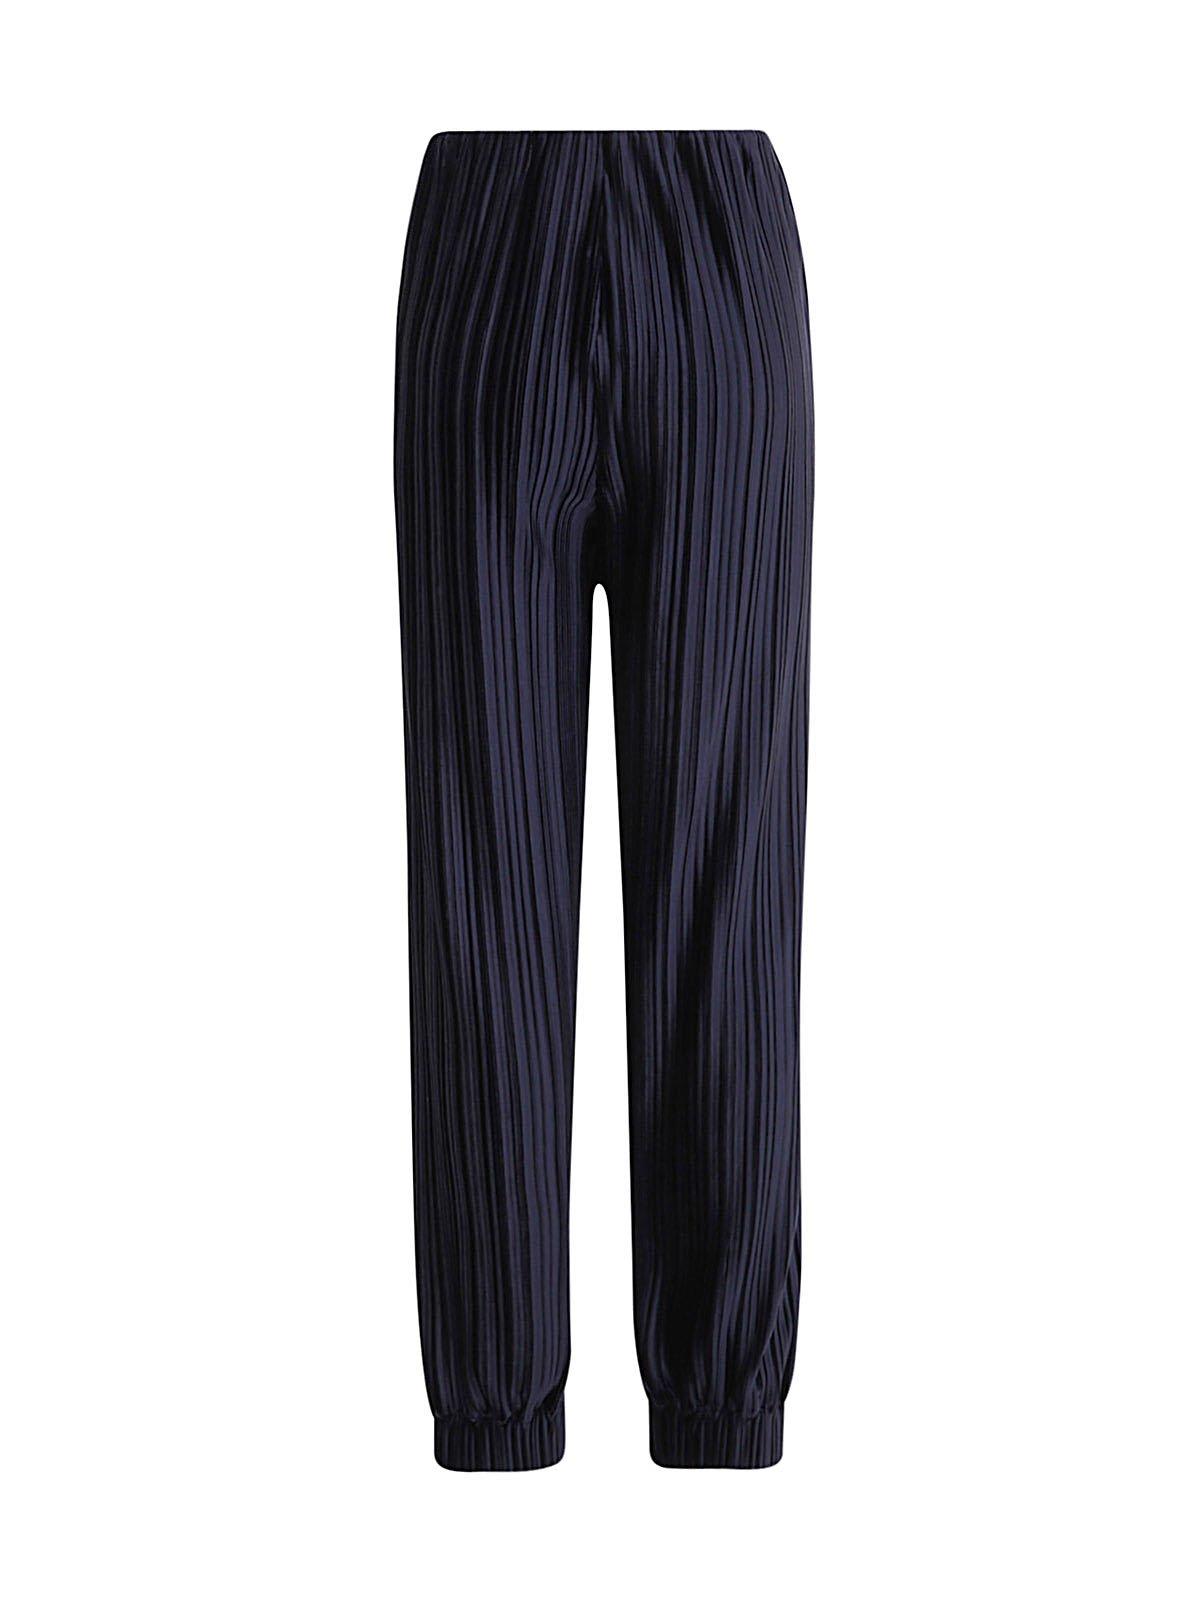 Giorgio Armani Slim Fit Pleated Trousers